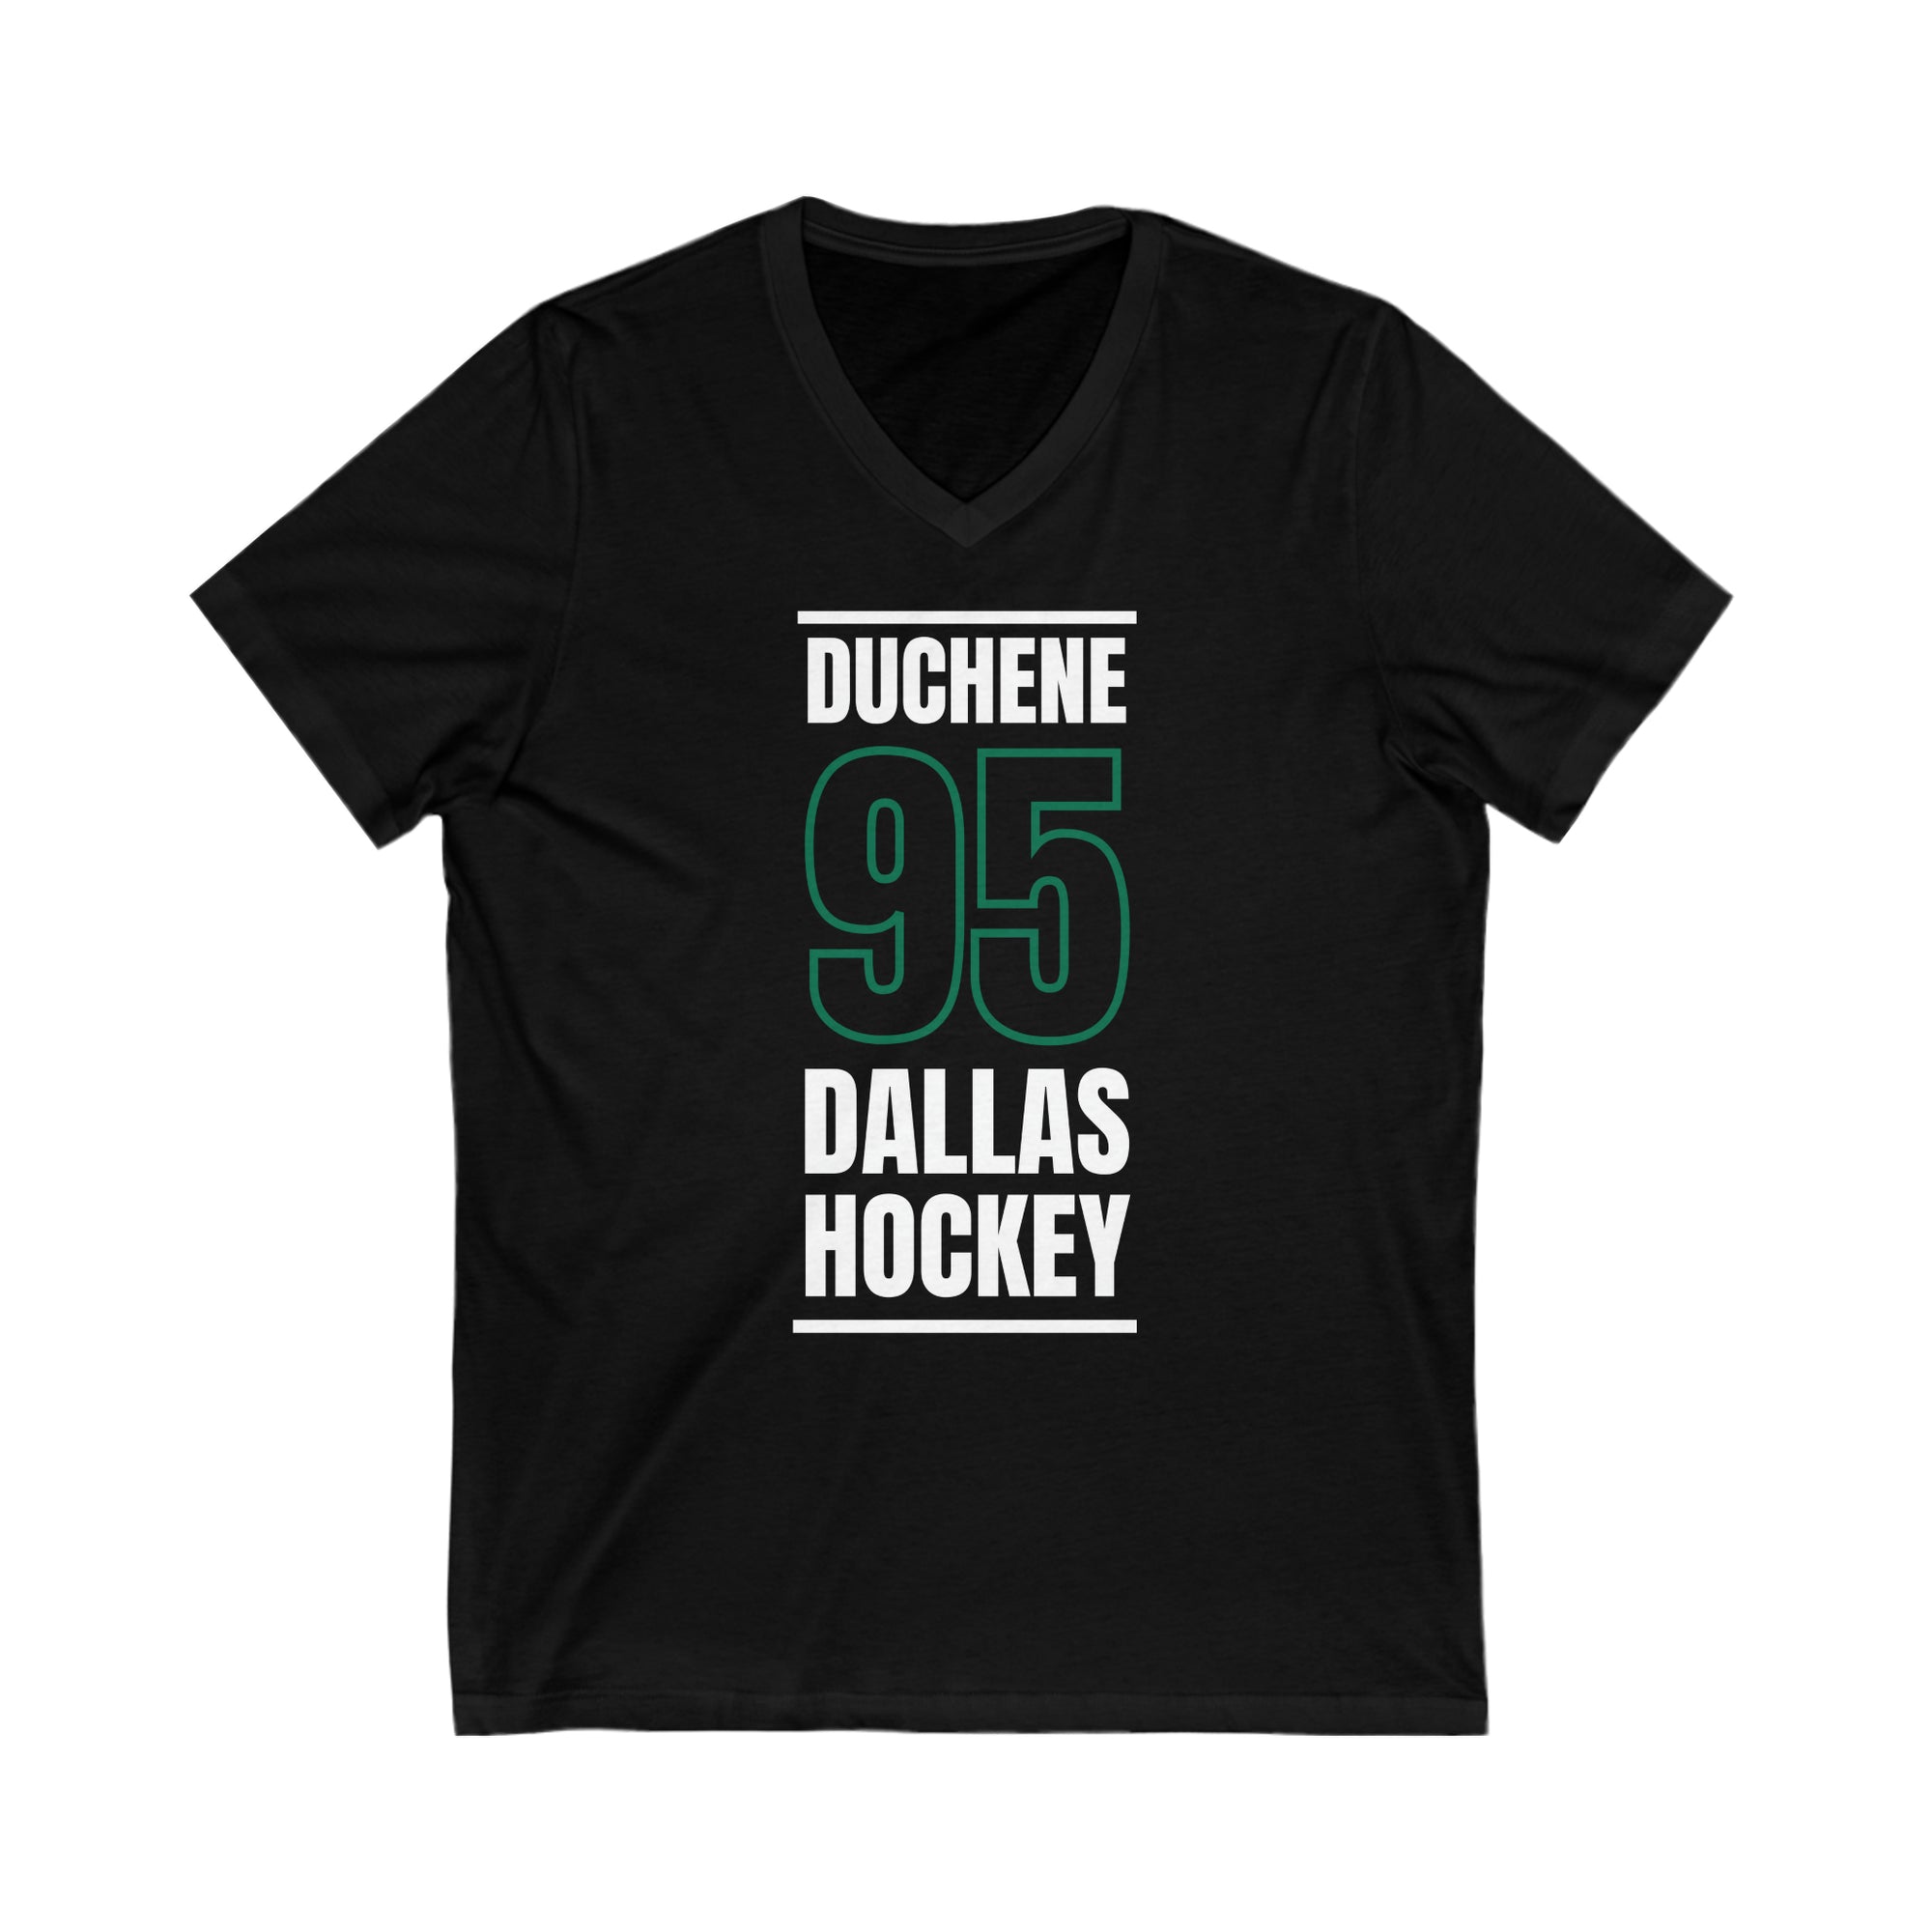 Duchene 95 Dallas Hockey Black Vertical Design Unisex V-Neck Tee